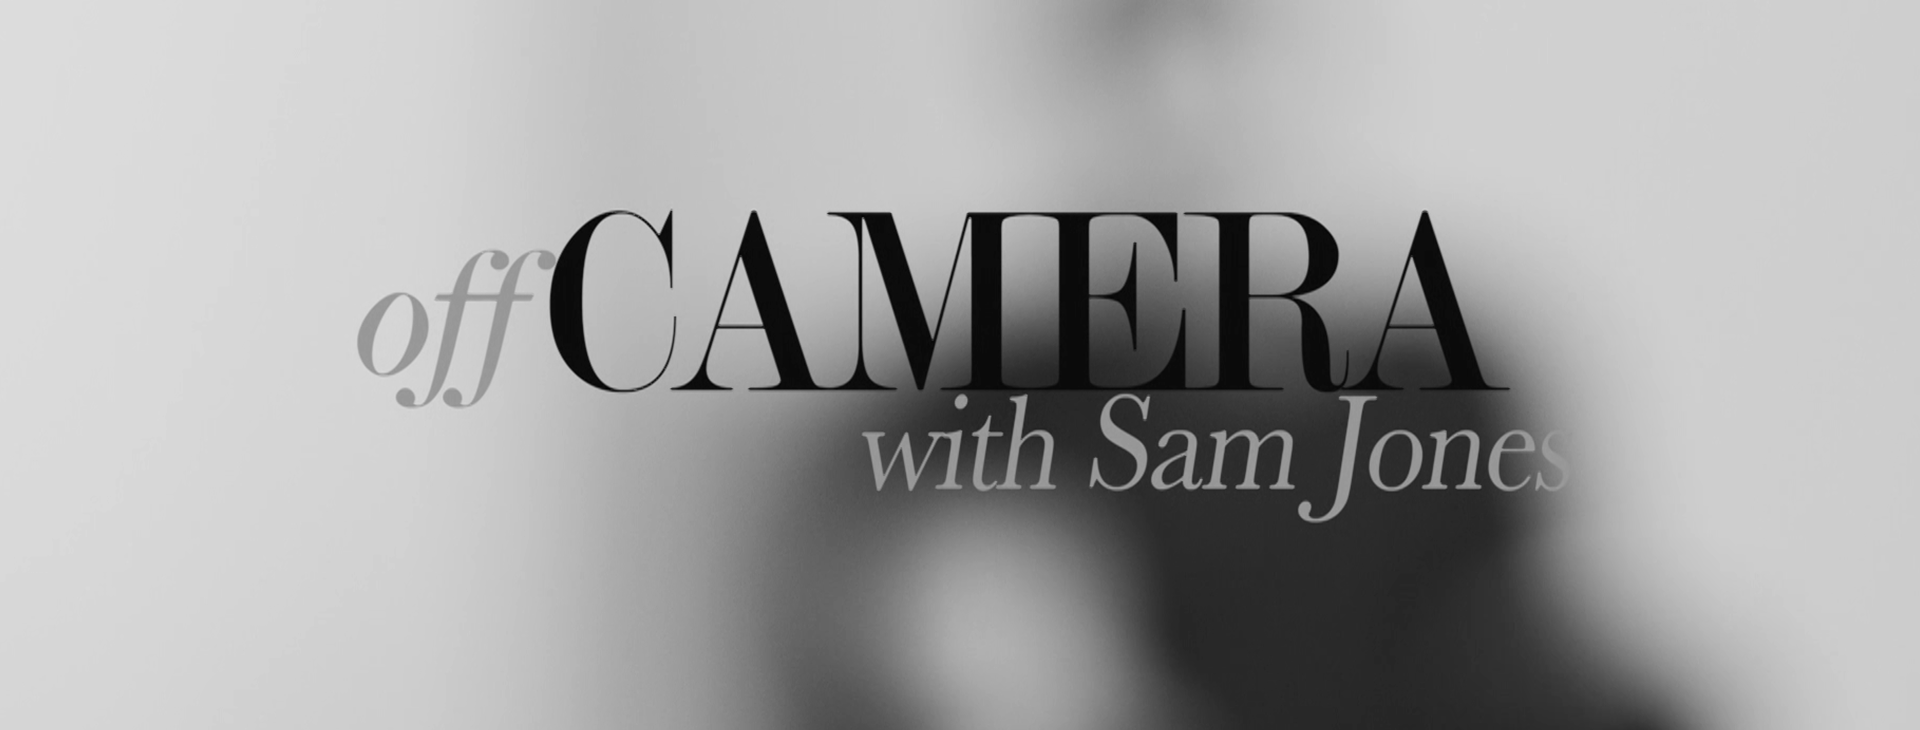 Off Camera with Sam Jones